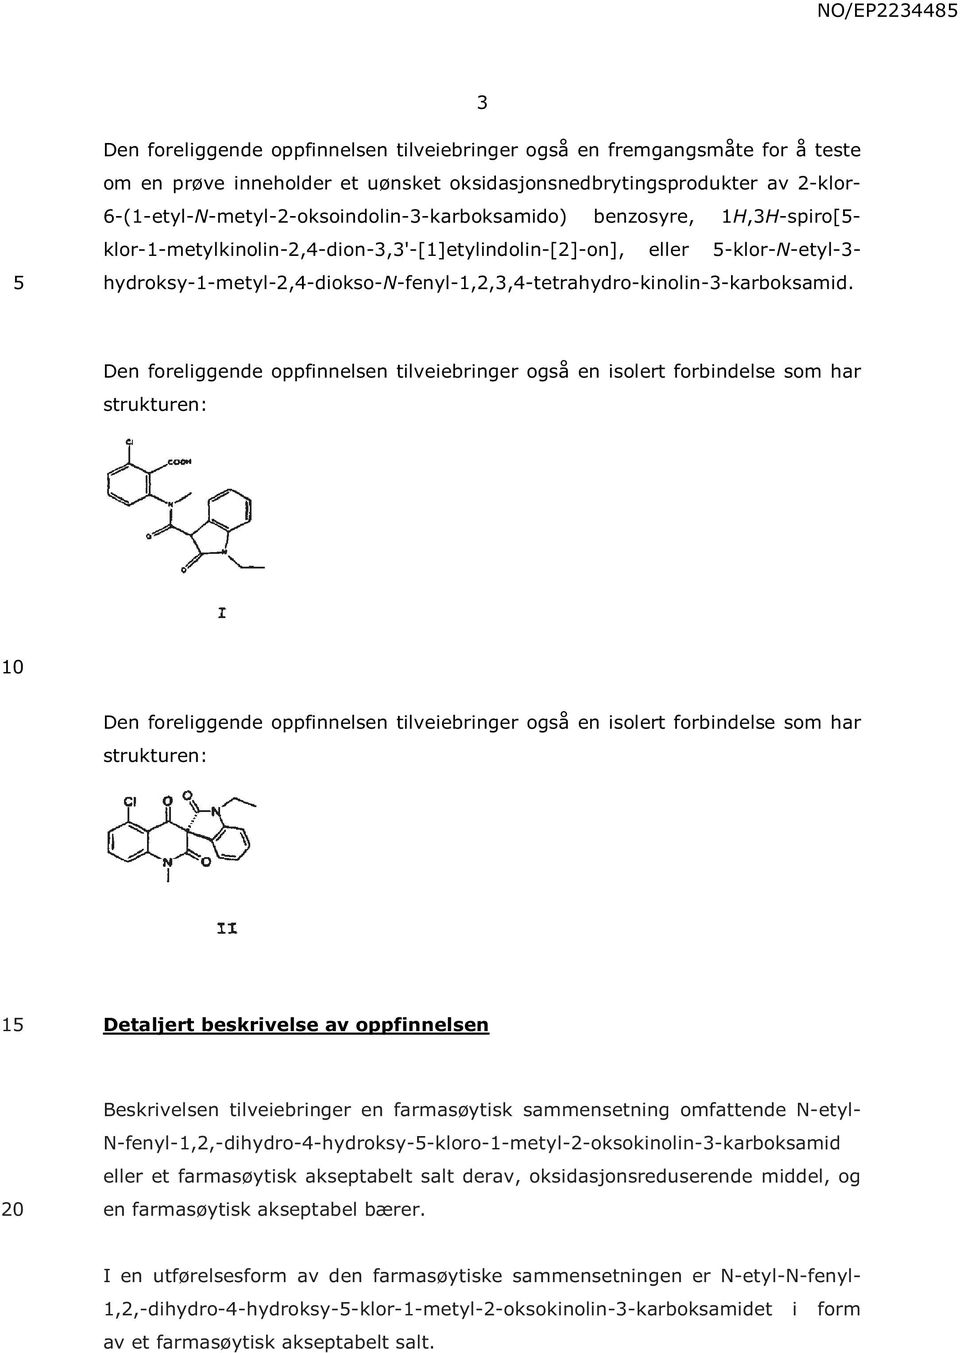 hydroksy-1-metyl-2,4-diokso-n-fenyl-1,2,3,4-tetrahydro-kinolin-3-karboksamid.